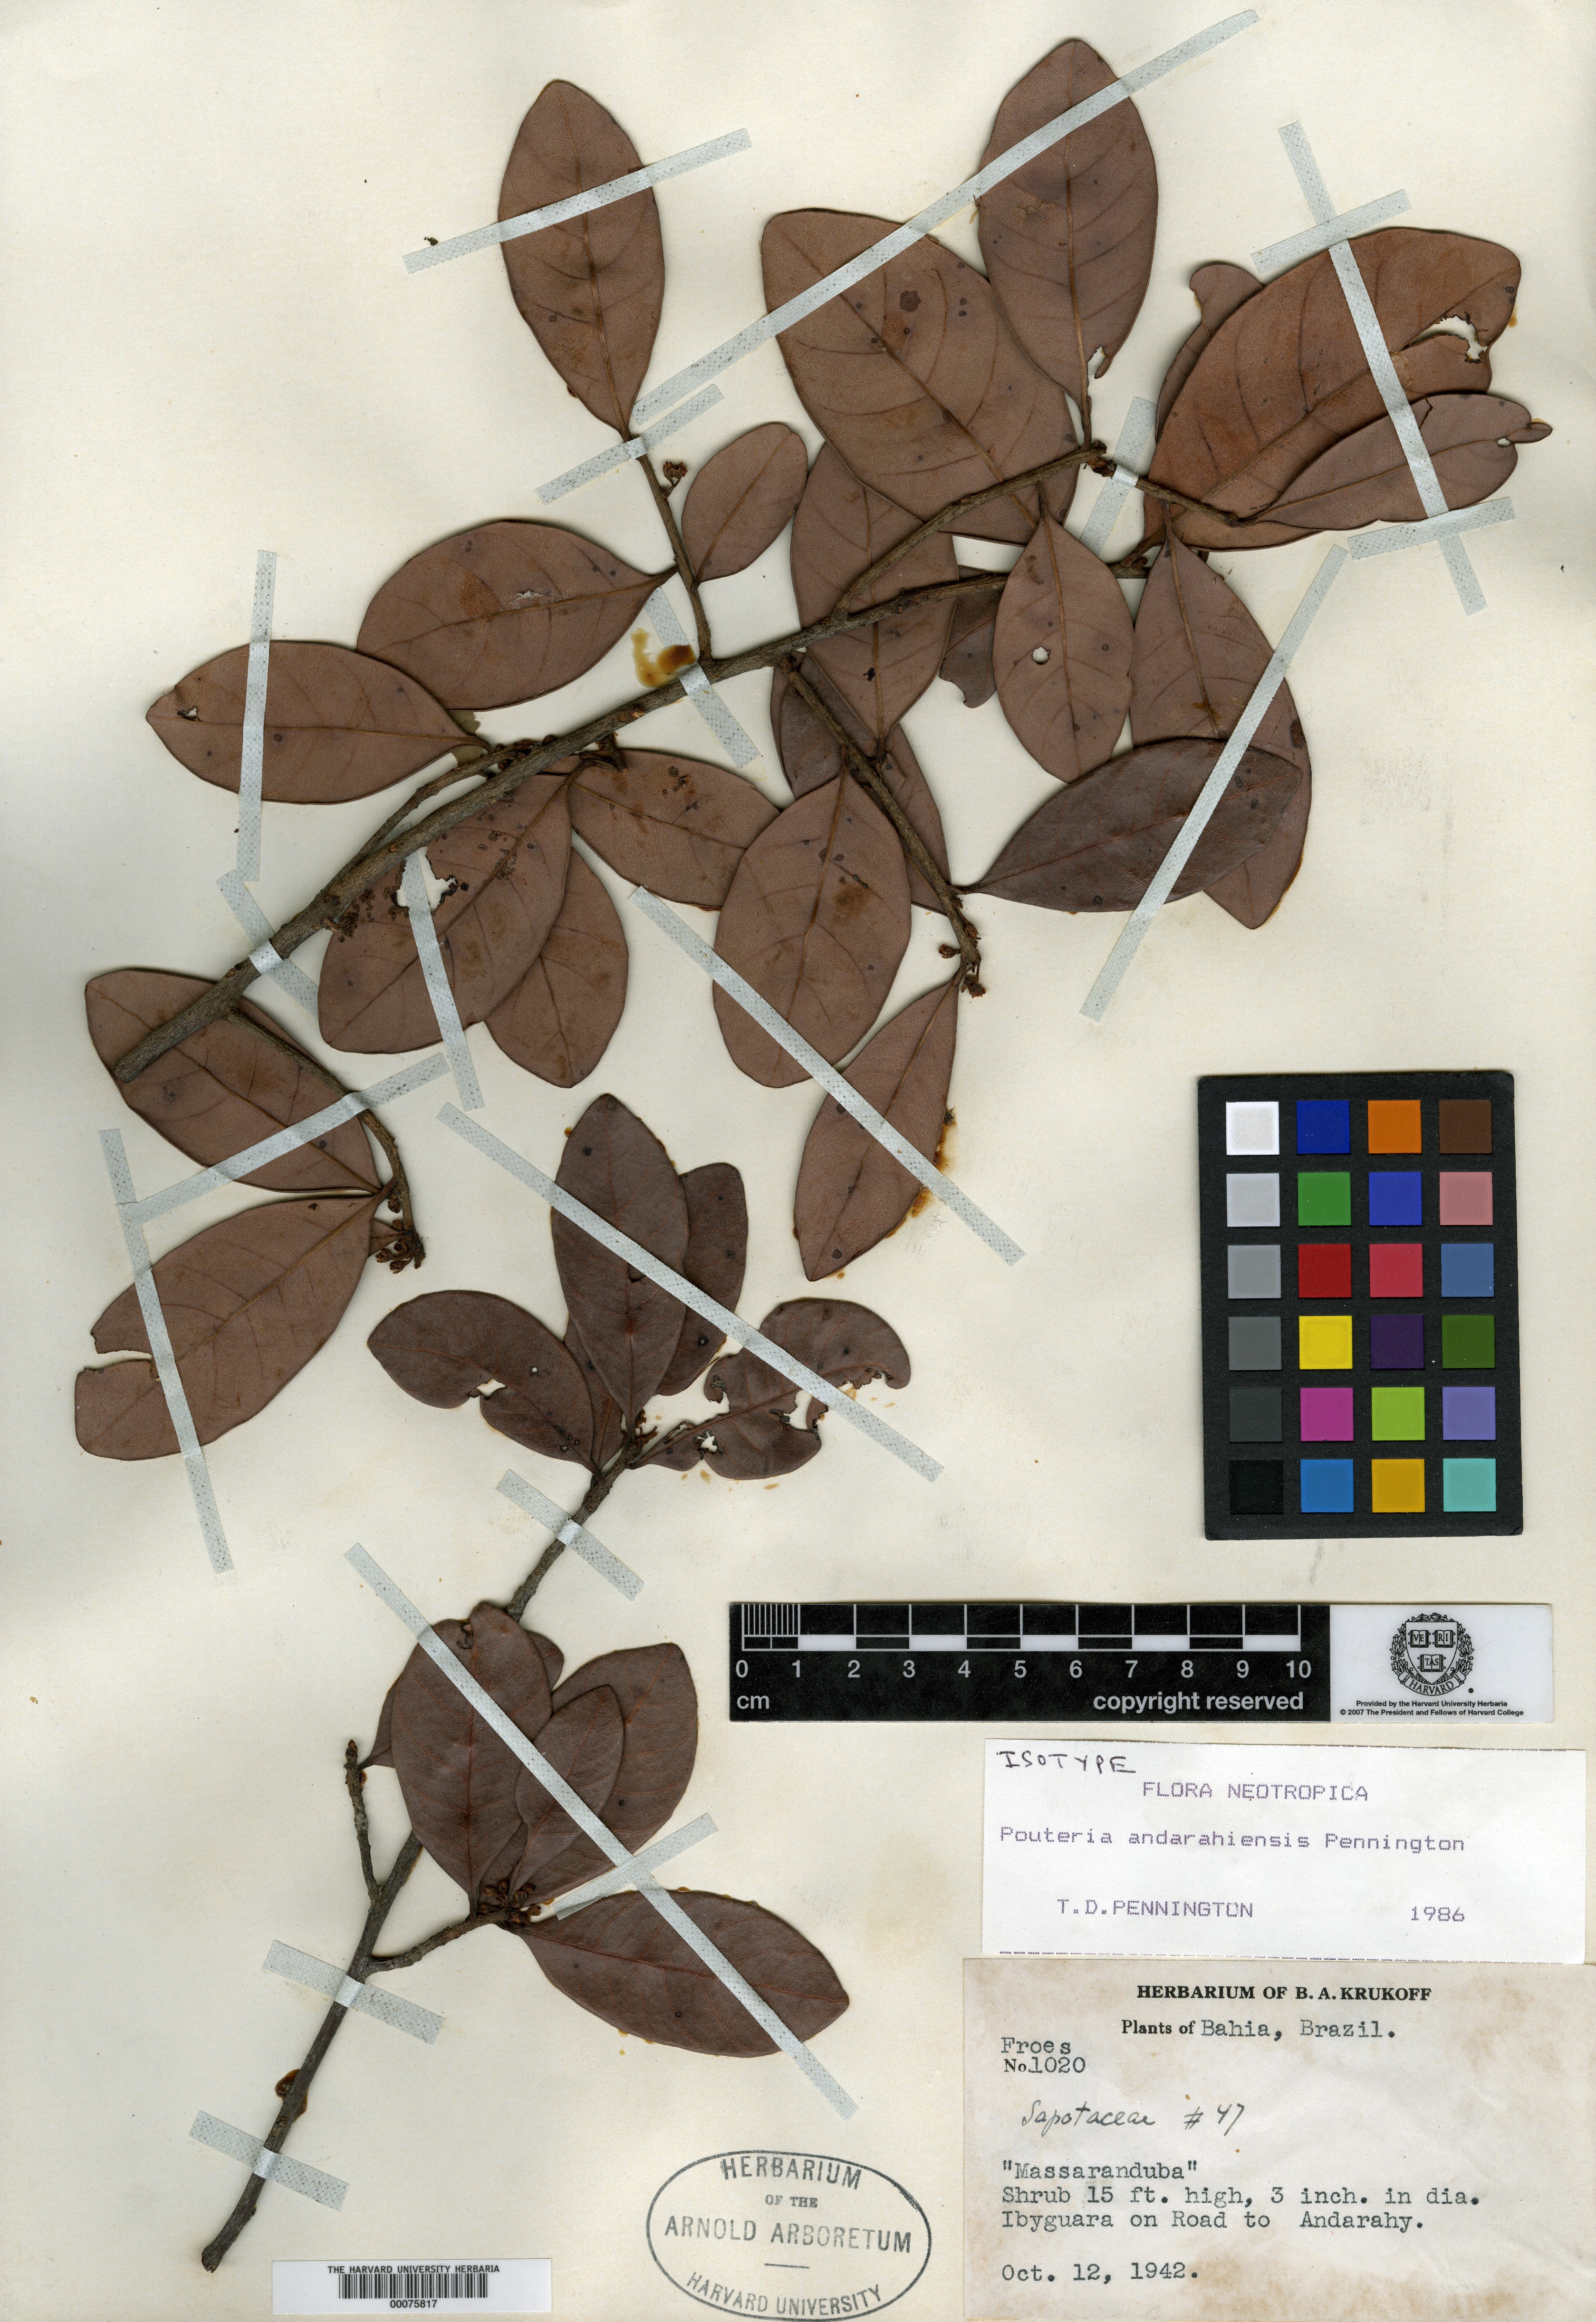 Pouteria andarahiensis image